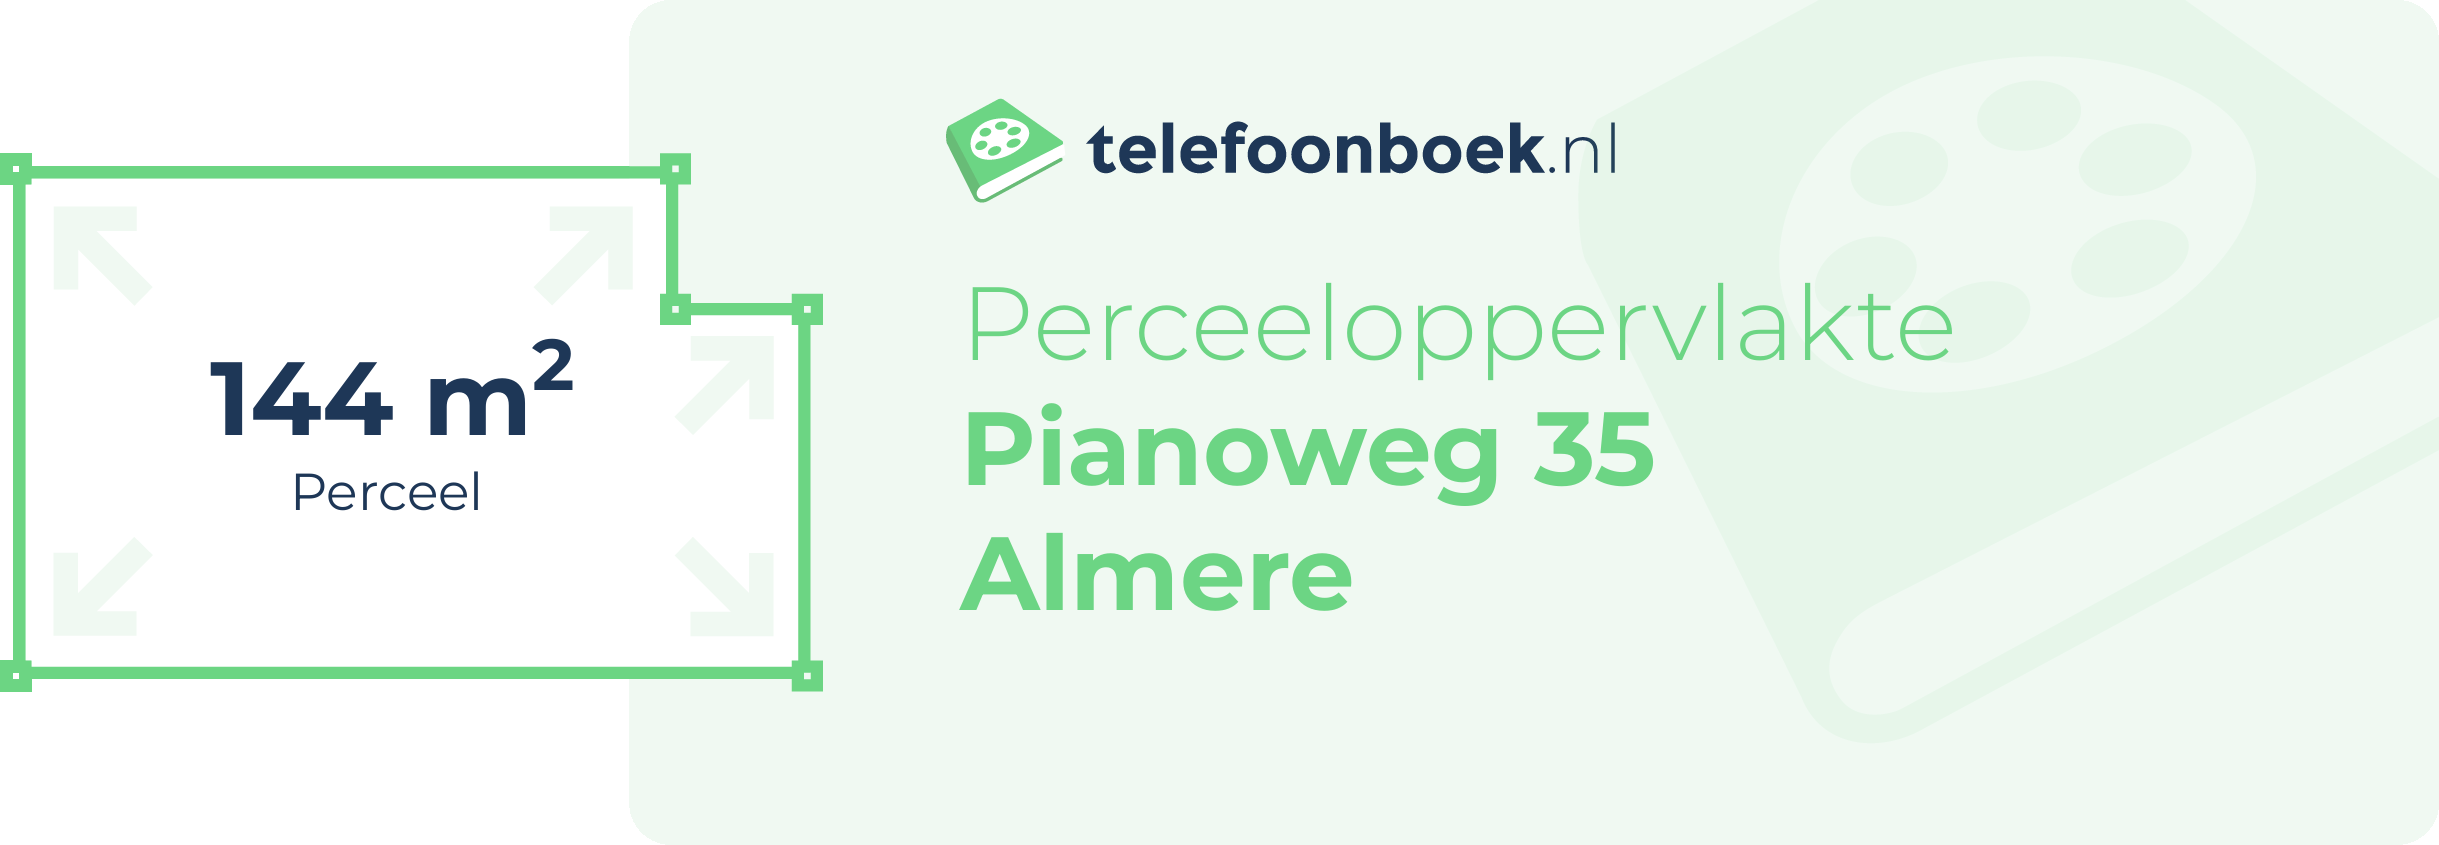 Perceeloppervlakte Pianoweg 35 Almere